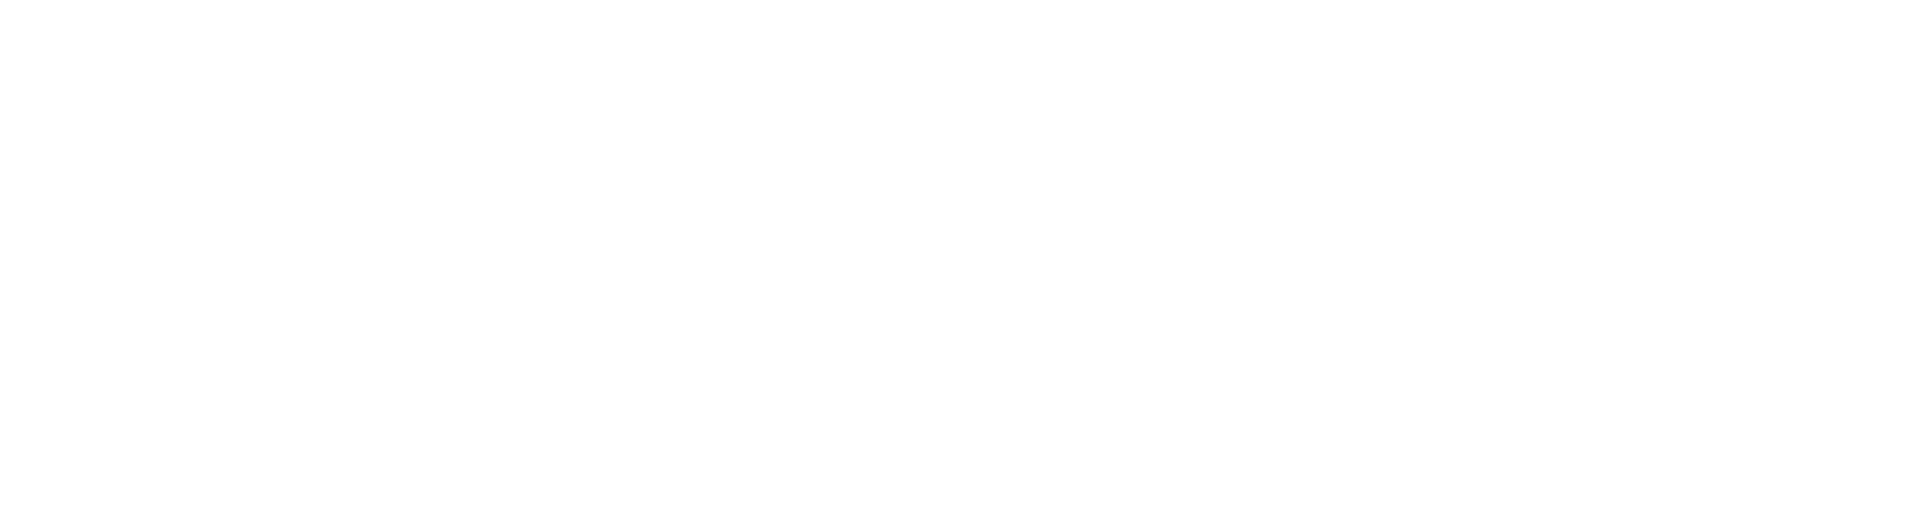 Educative Tech